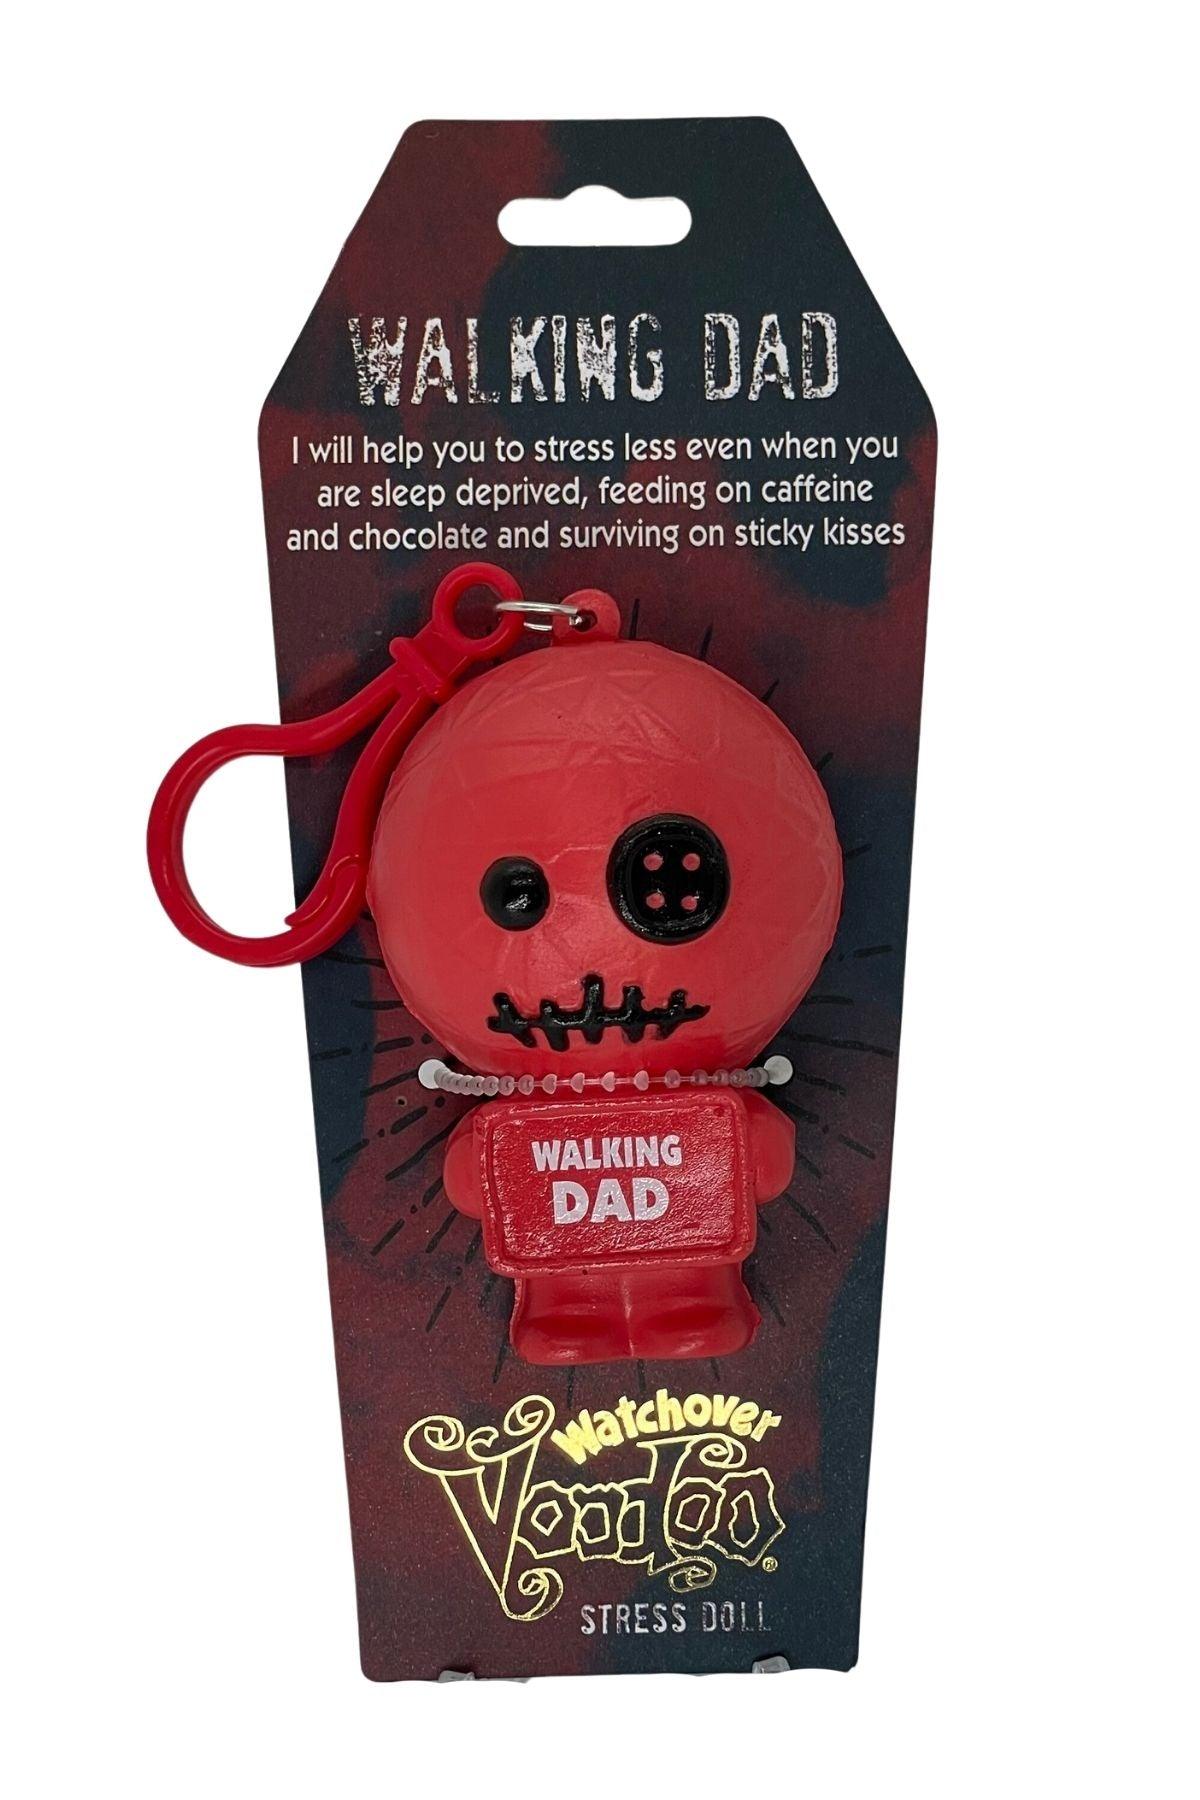 Voodoo Stress Doll - Walking Dad - Watchover Voodoo - Stress Doll